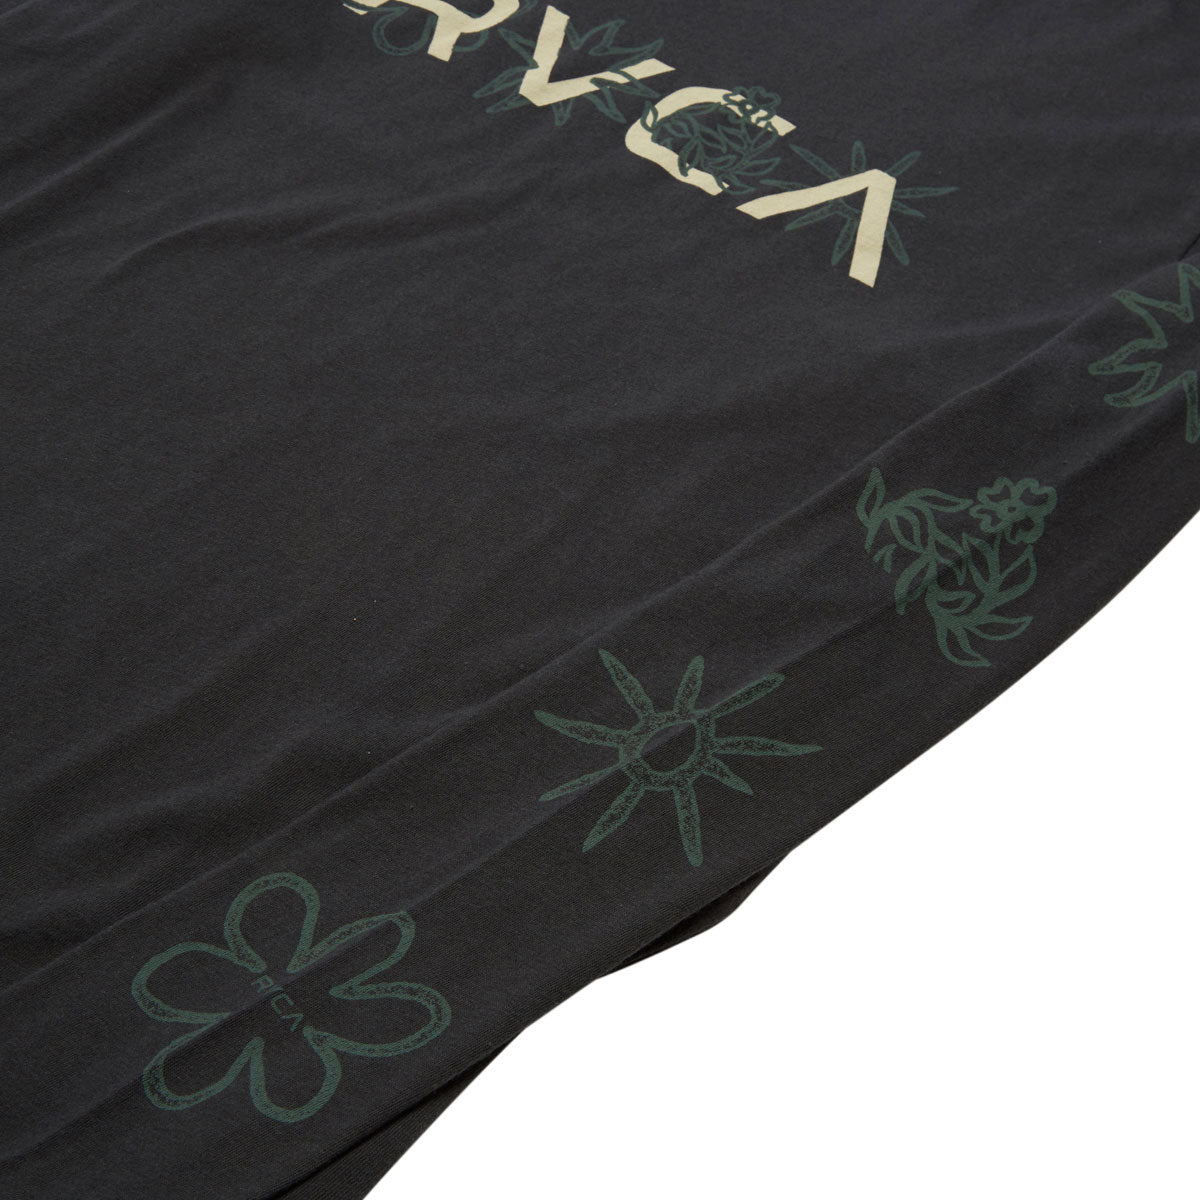 RVCA Big Bloom Long Sleeve T-Shirt - Pirate Black image 2